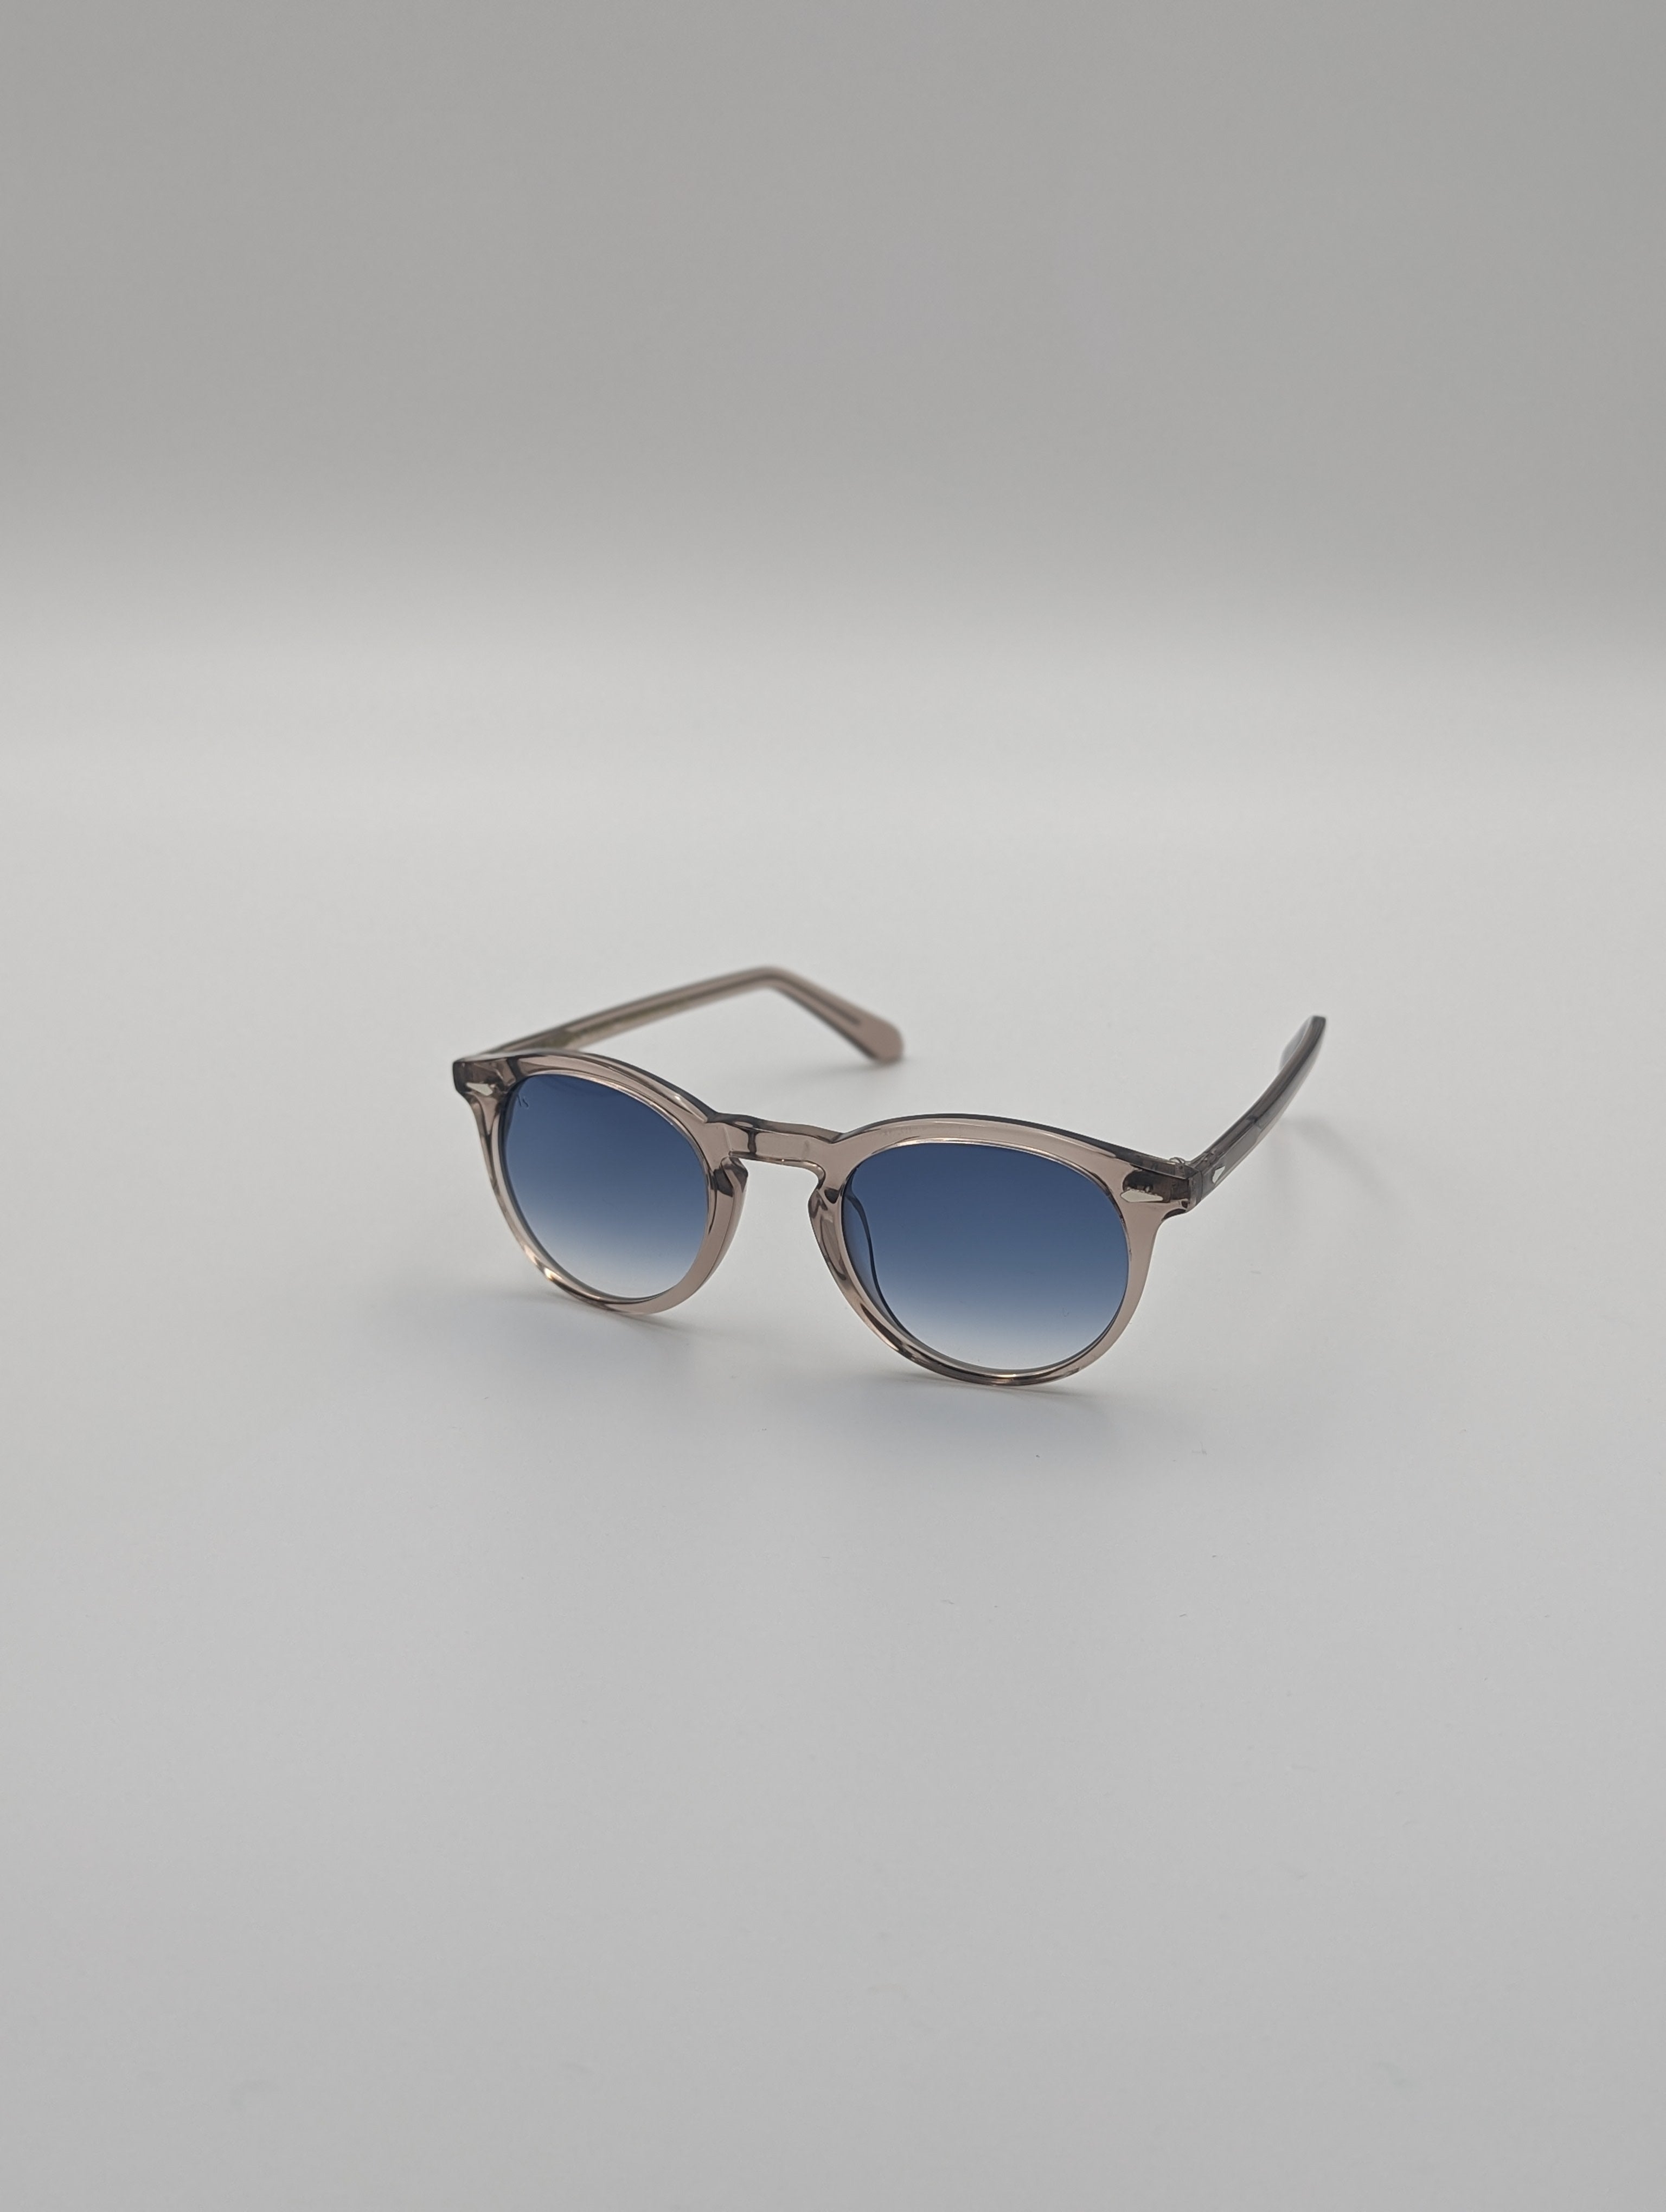 Sunglasses Iconic - Taupe